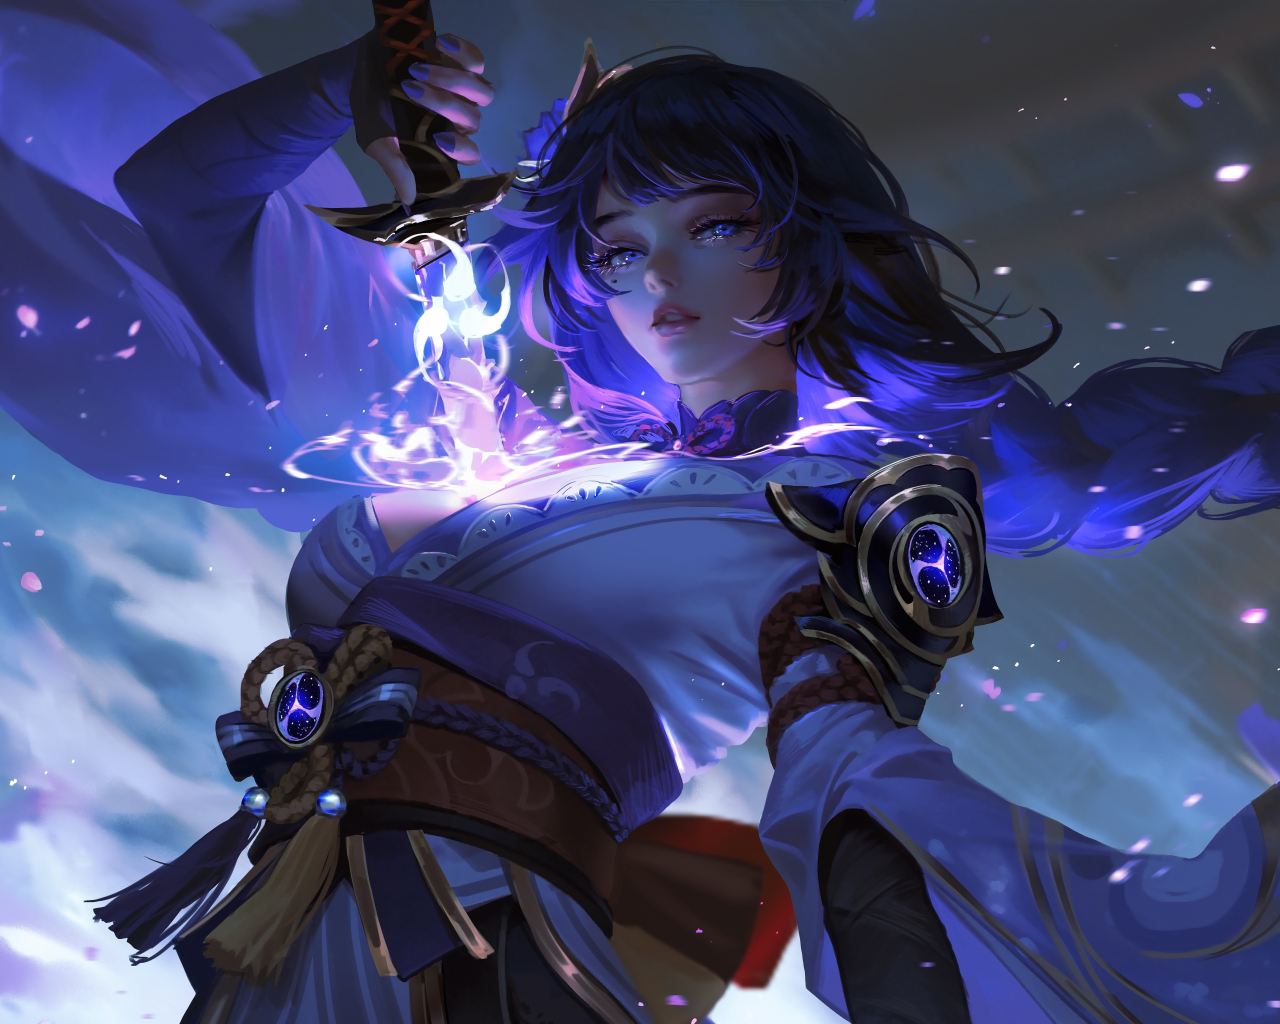 Download wallpaper 1280x1024 cute girl with blue sword, fantasy, art ...